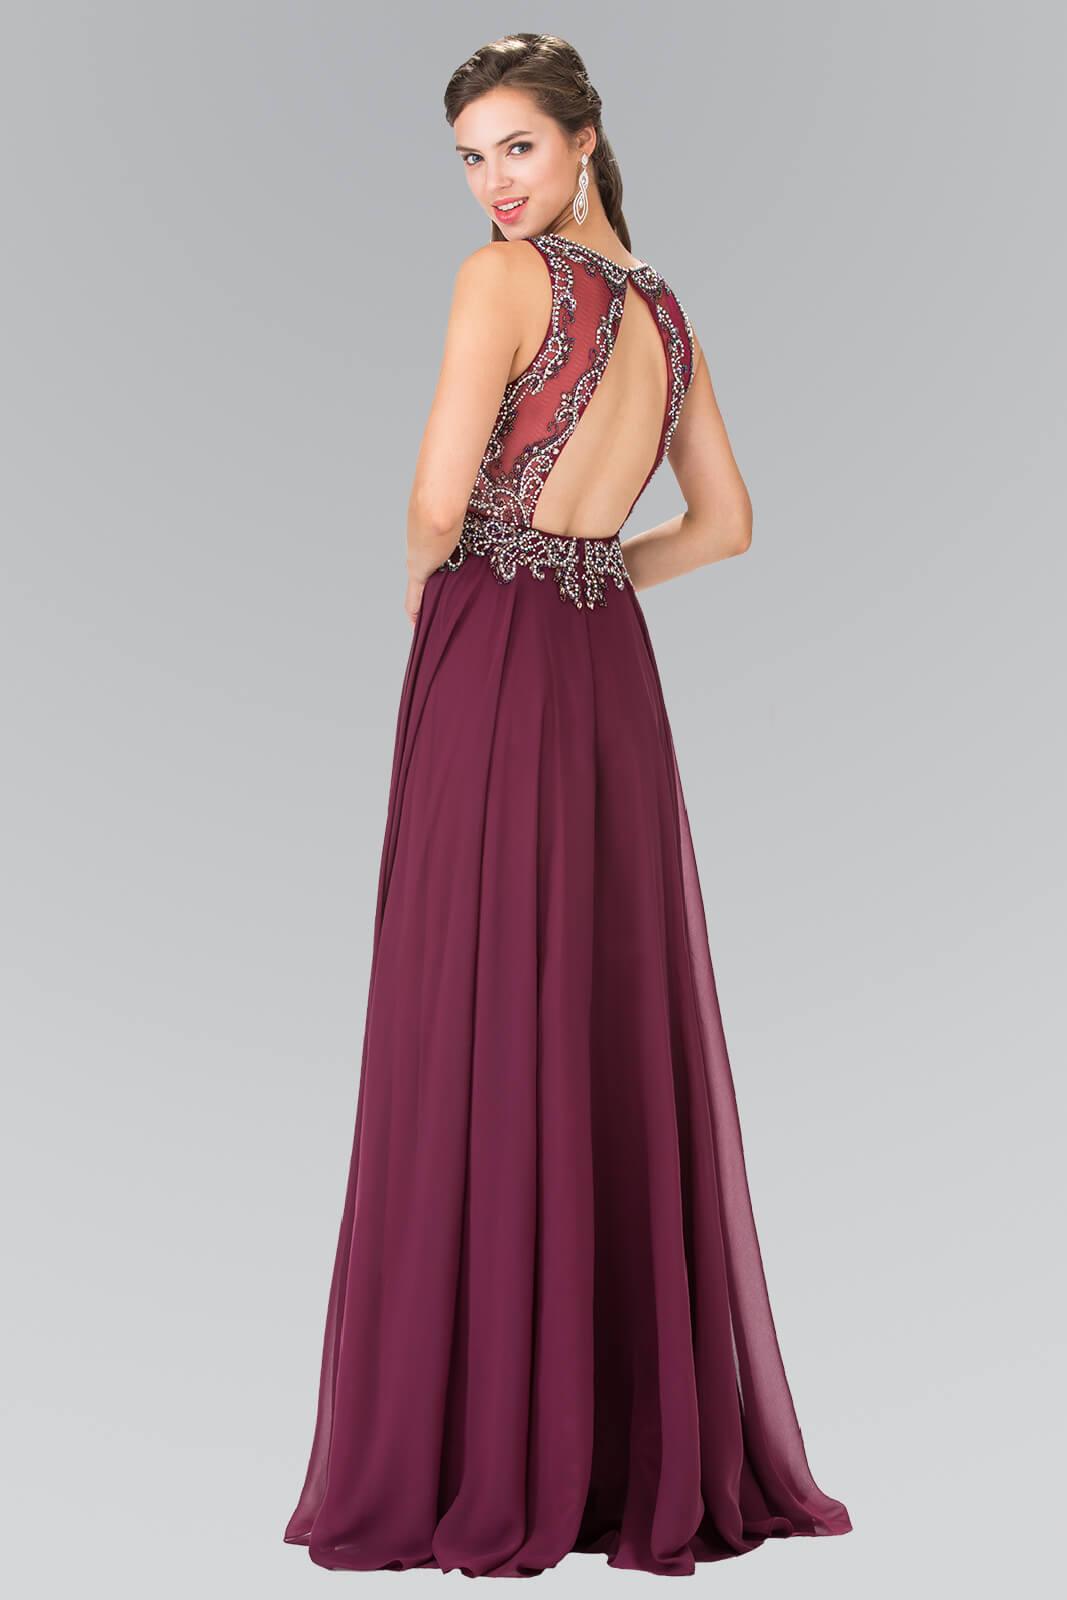 Prom Long Sleeveless Beaded Chiffon Evening Dress - The Dress Outlet Elizabeth K